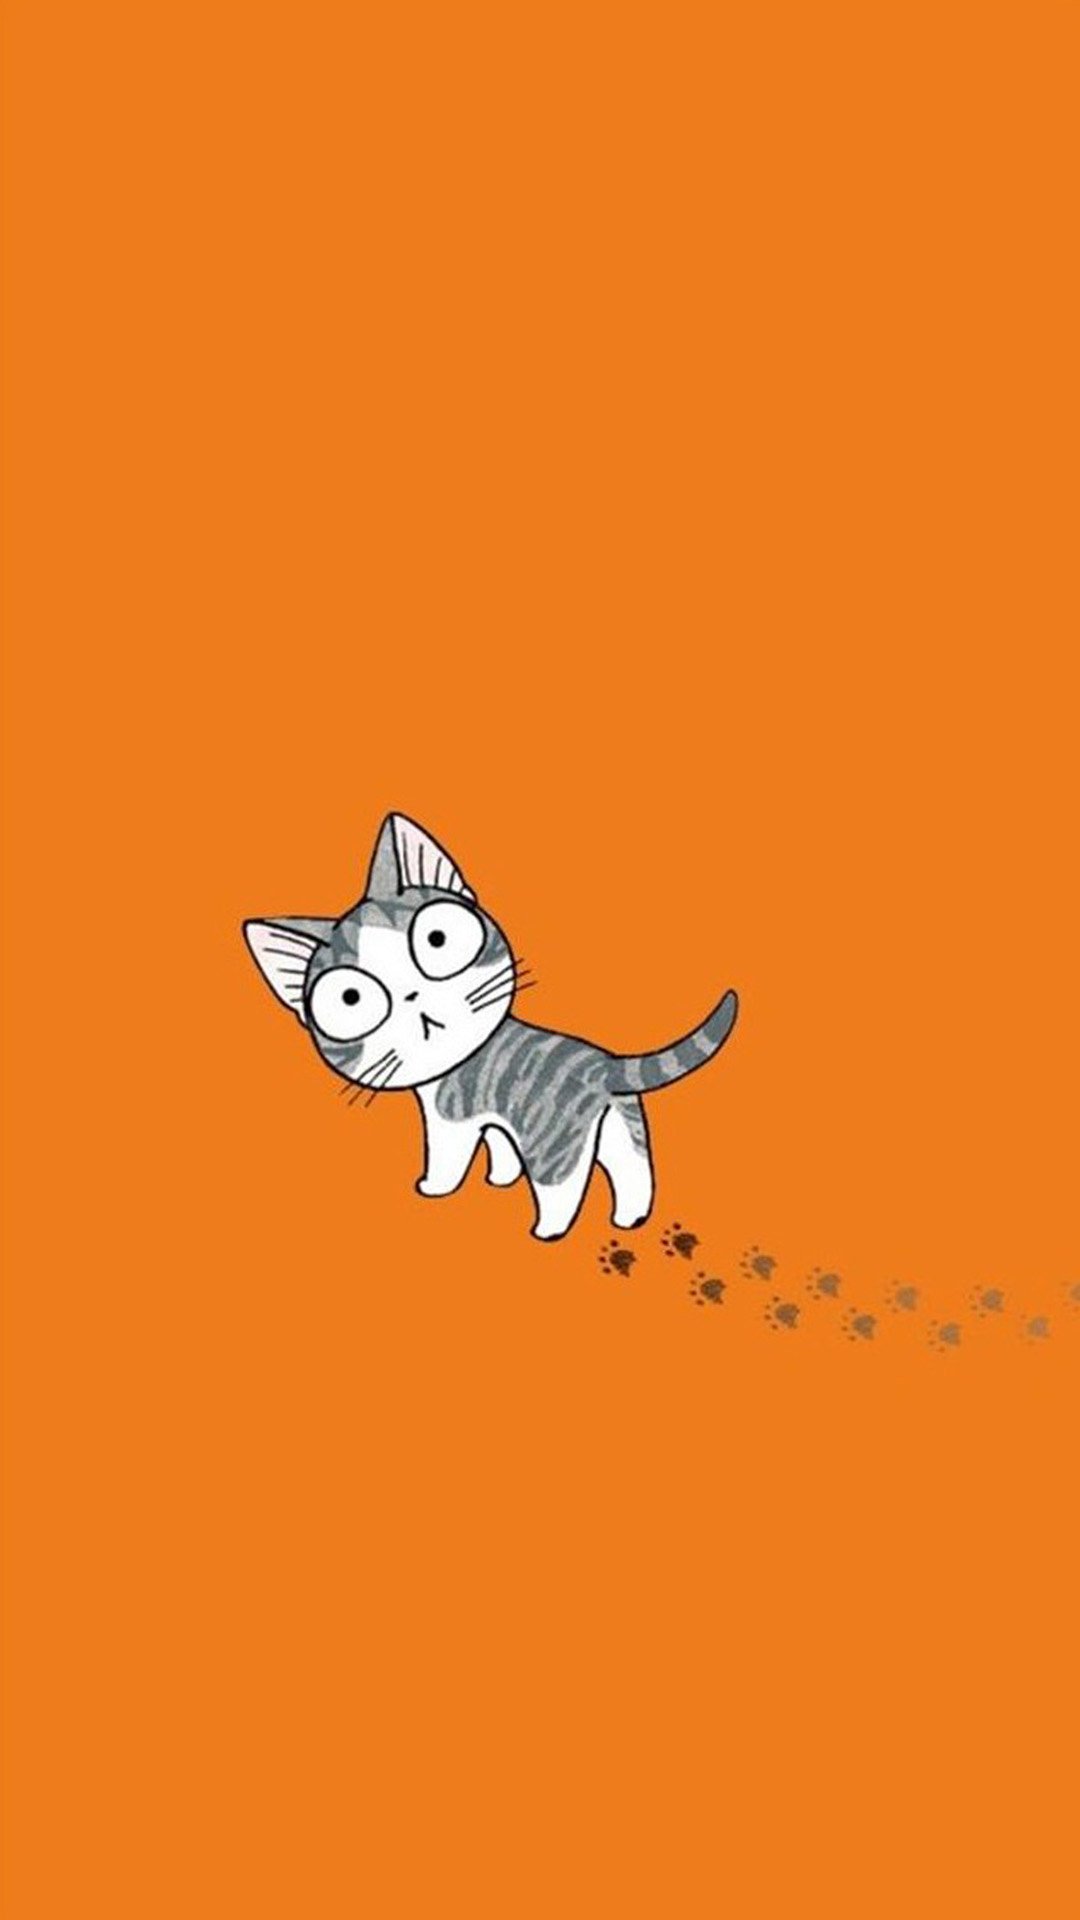 [75+] Cartoon Cat Wallpaper on WallpaperSafari